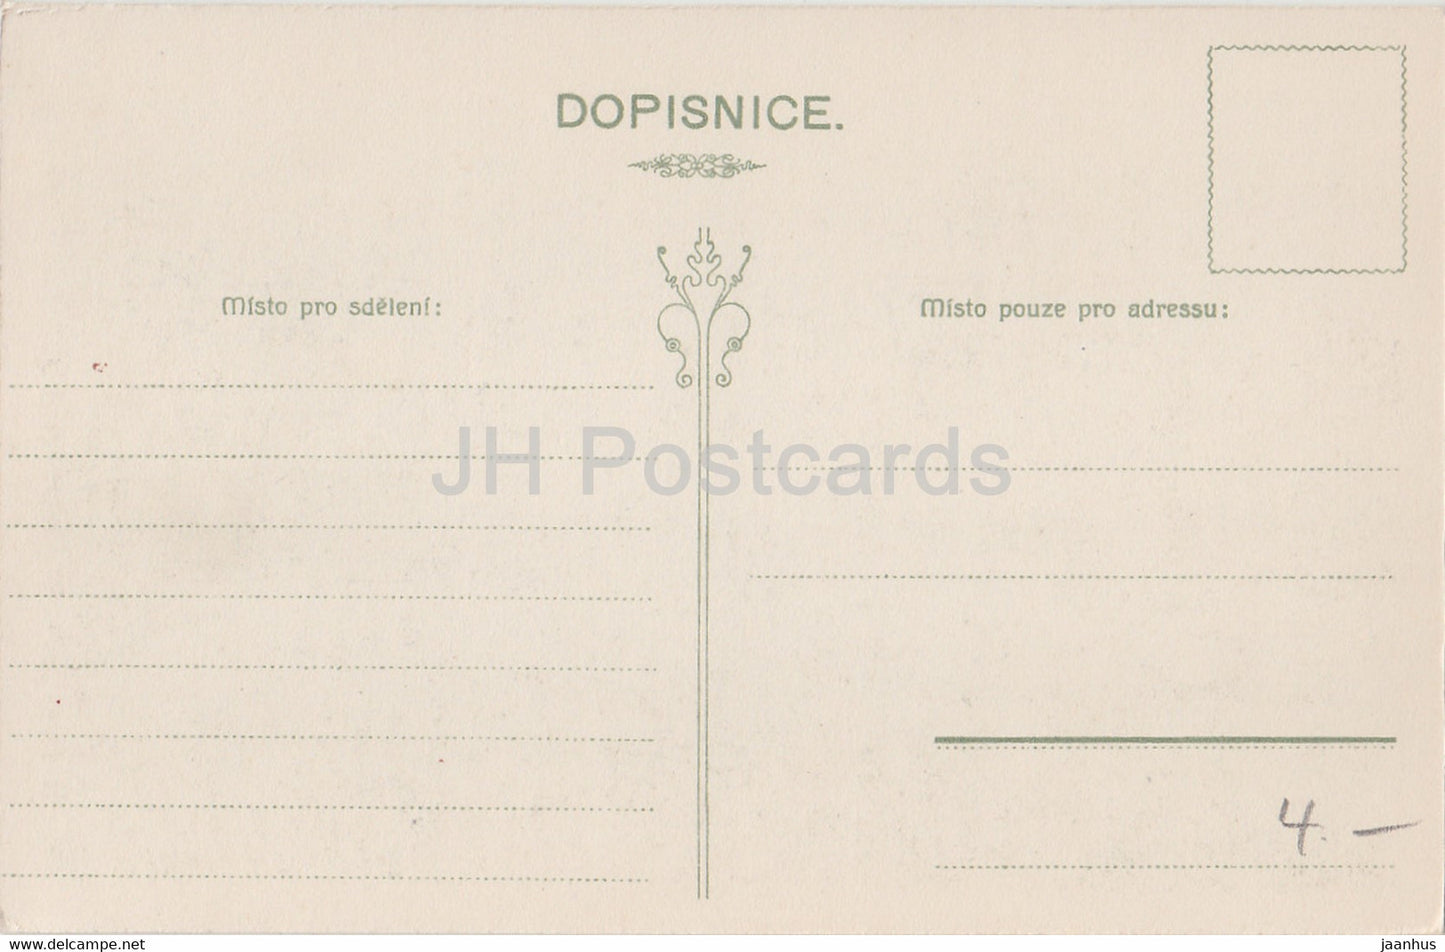 Nove Mesto - Pohled s Petrina - Depose 2 - old postcard - Czech Republic - unused